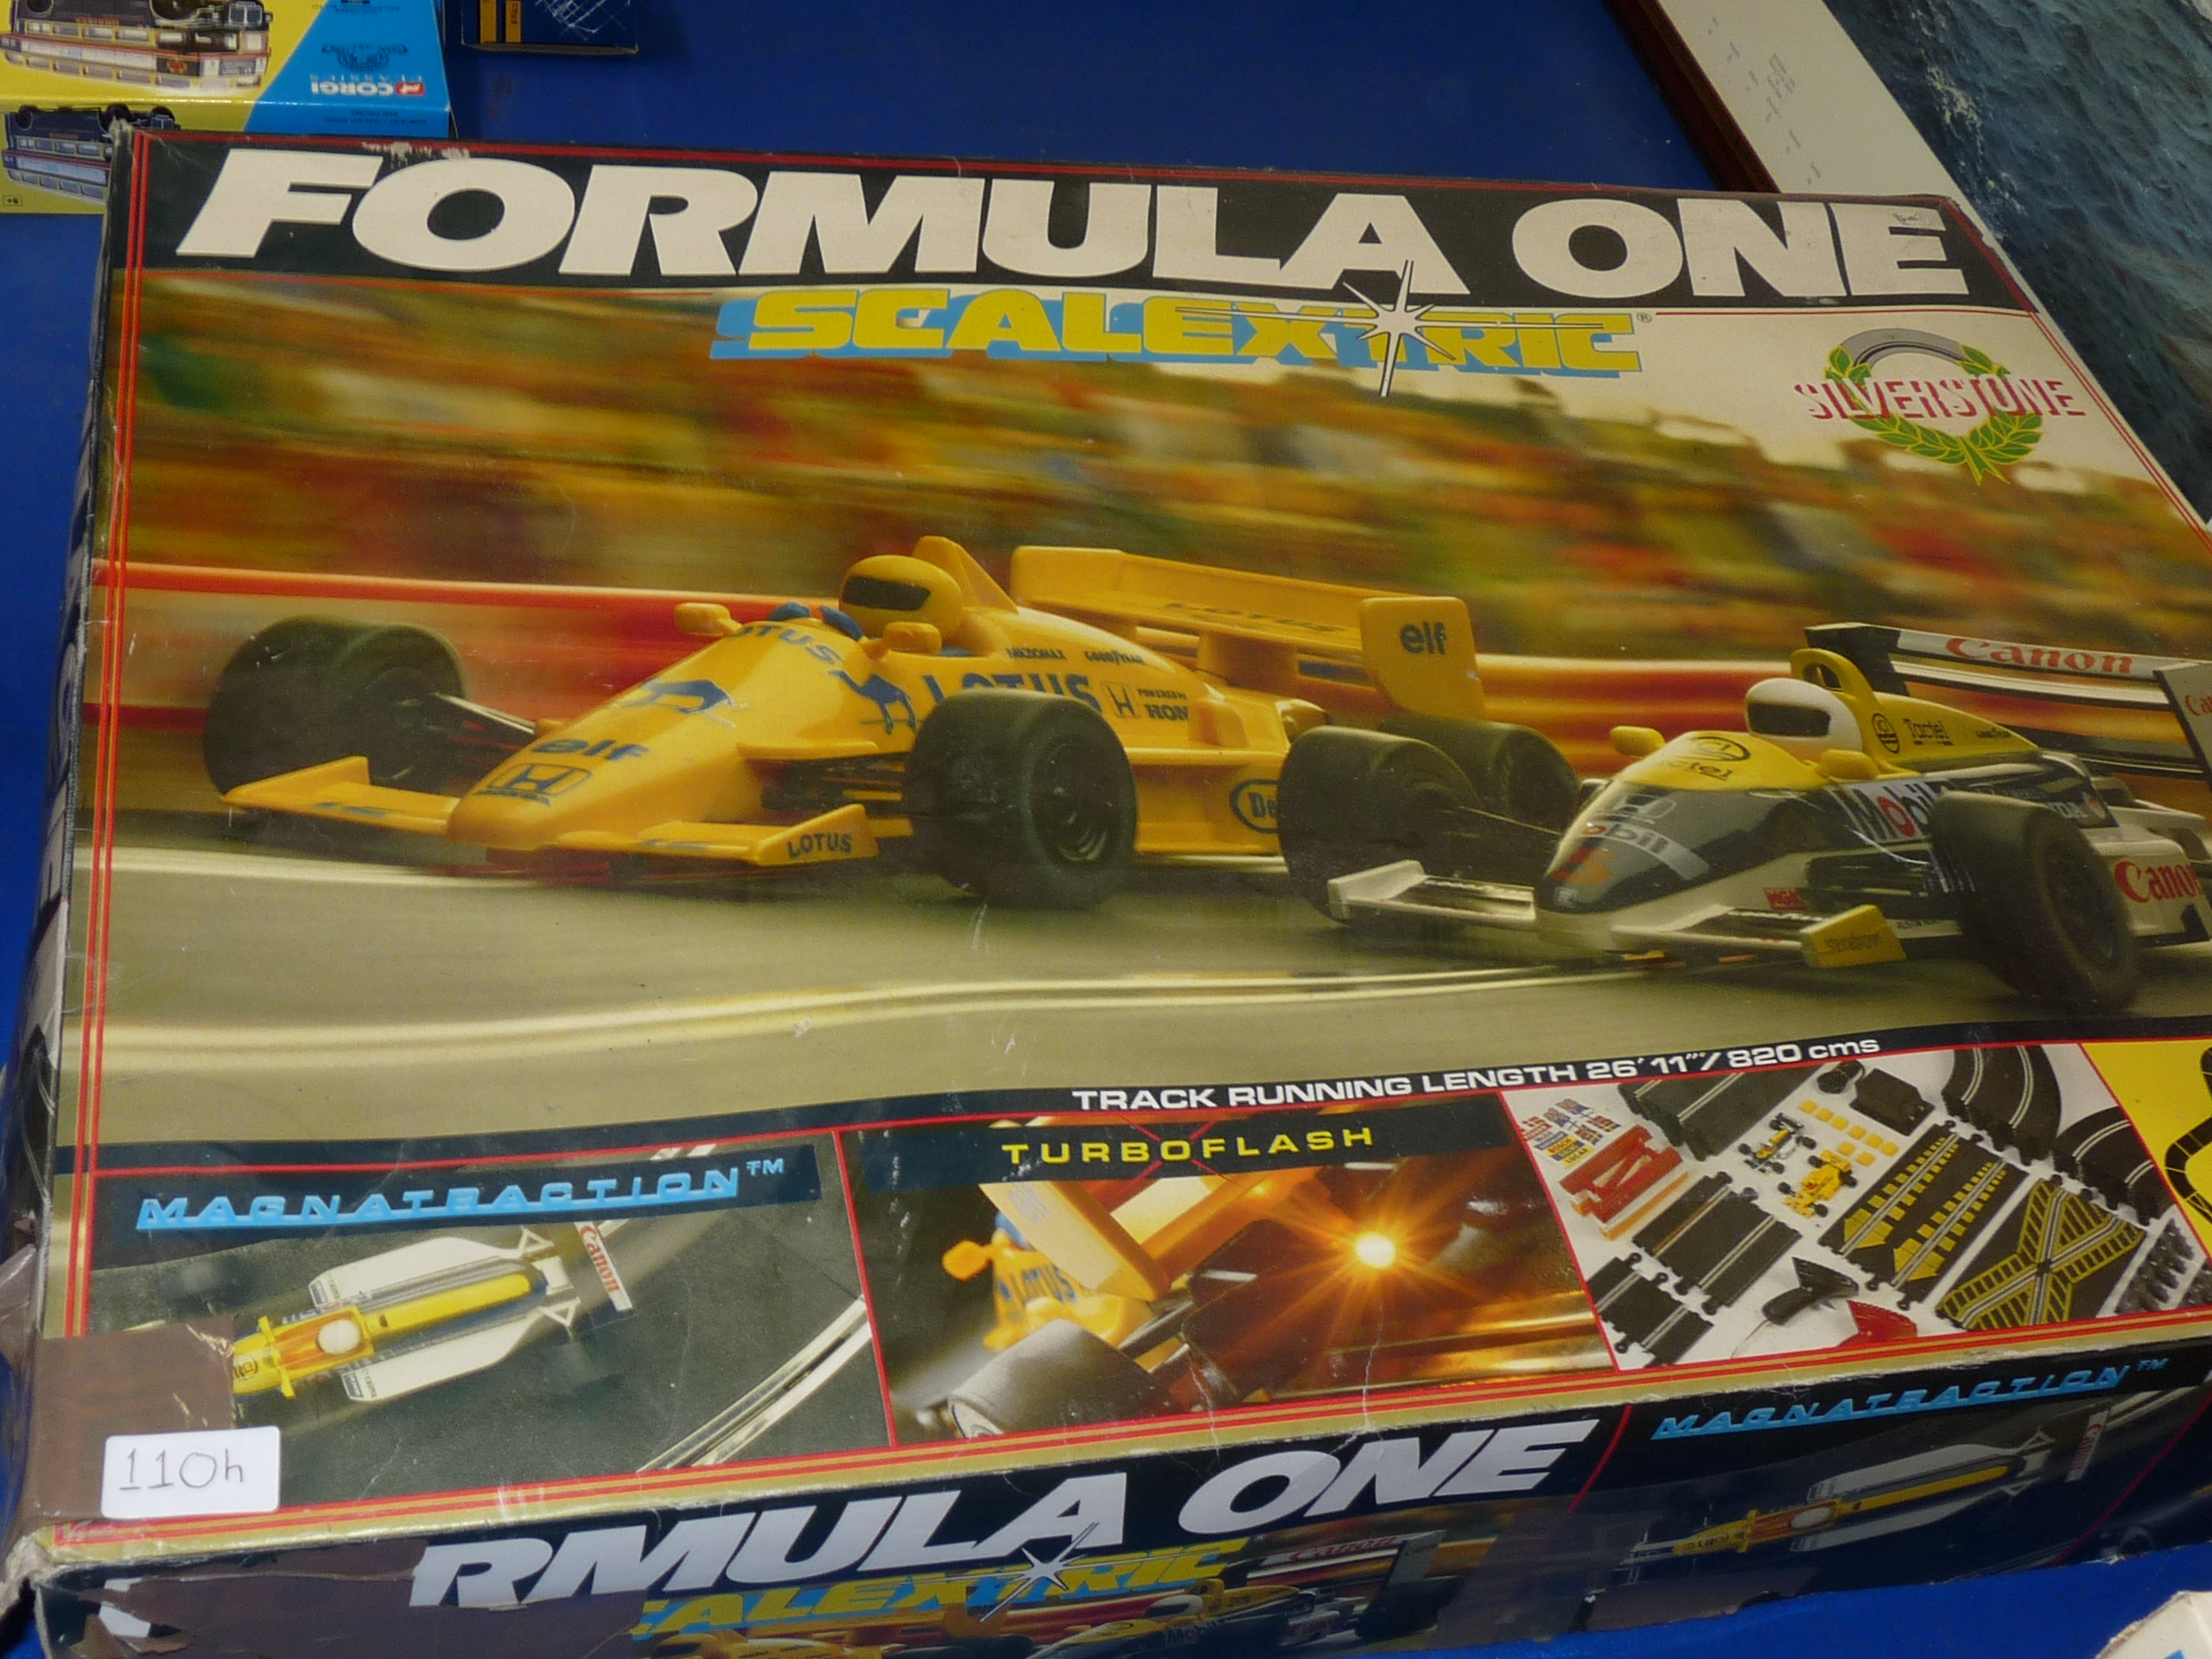 Formula One Scalextric set